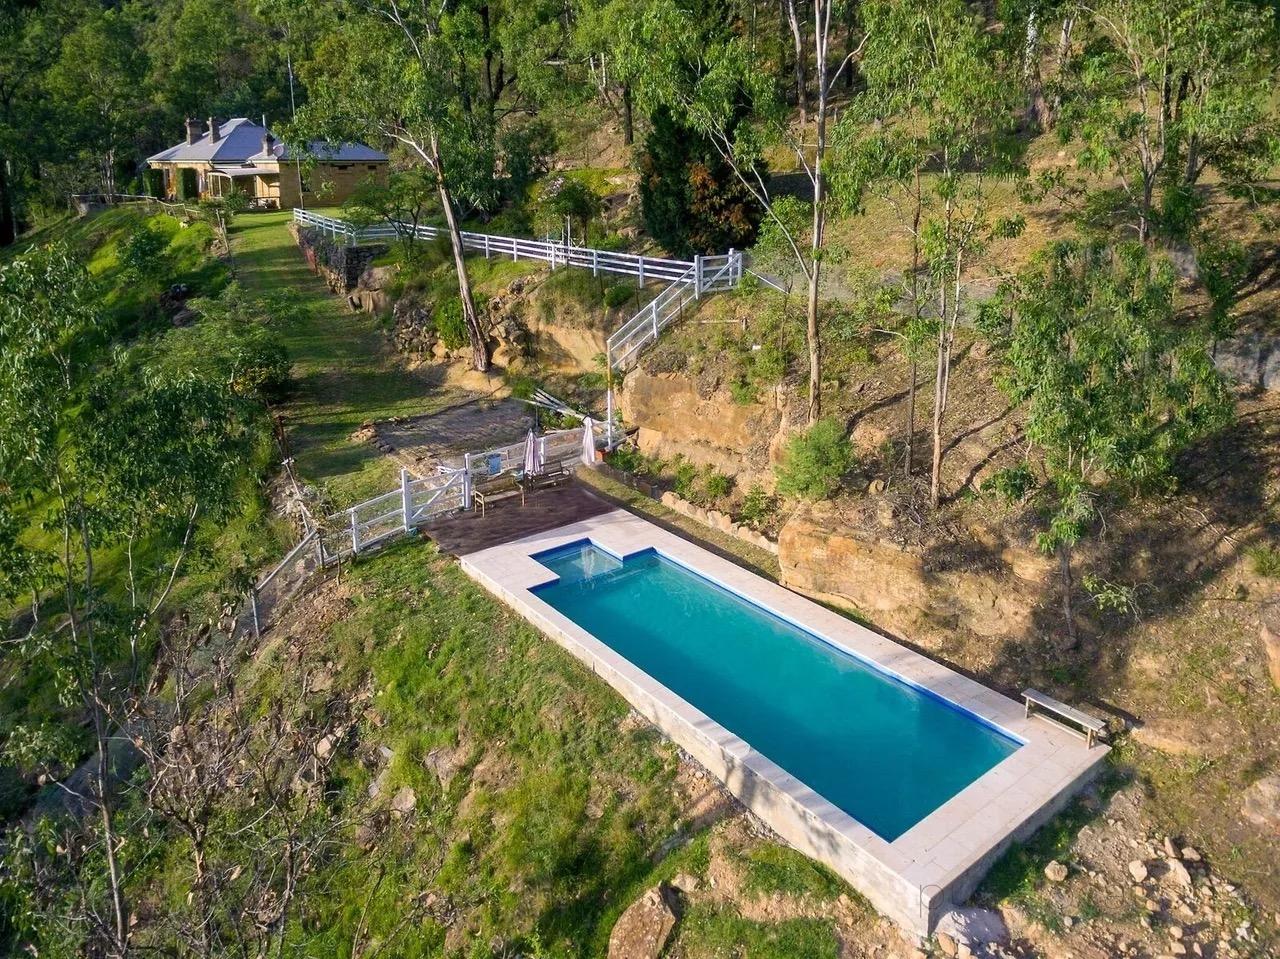 Pool in bushland setting